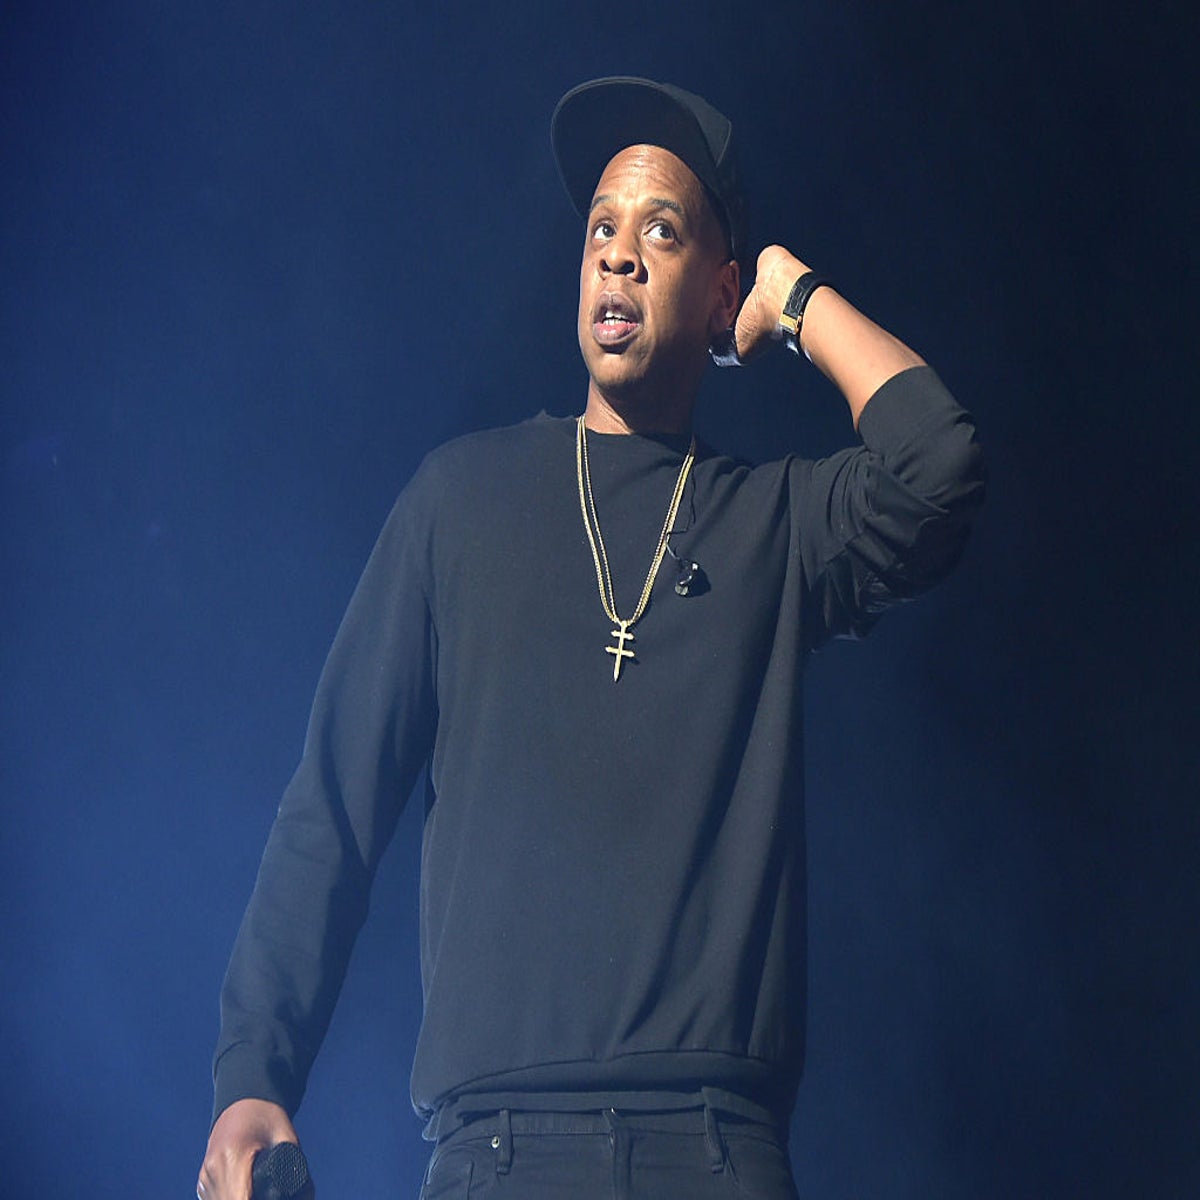 U.S. regulator orders Jay-Z to testify on sale of clothing brand